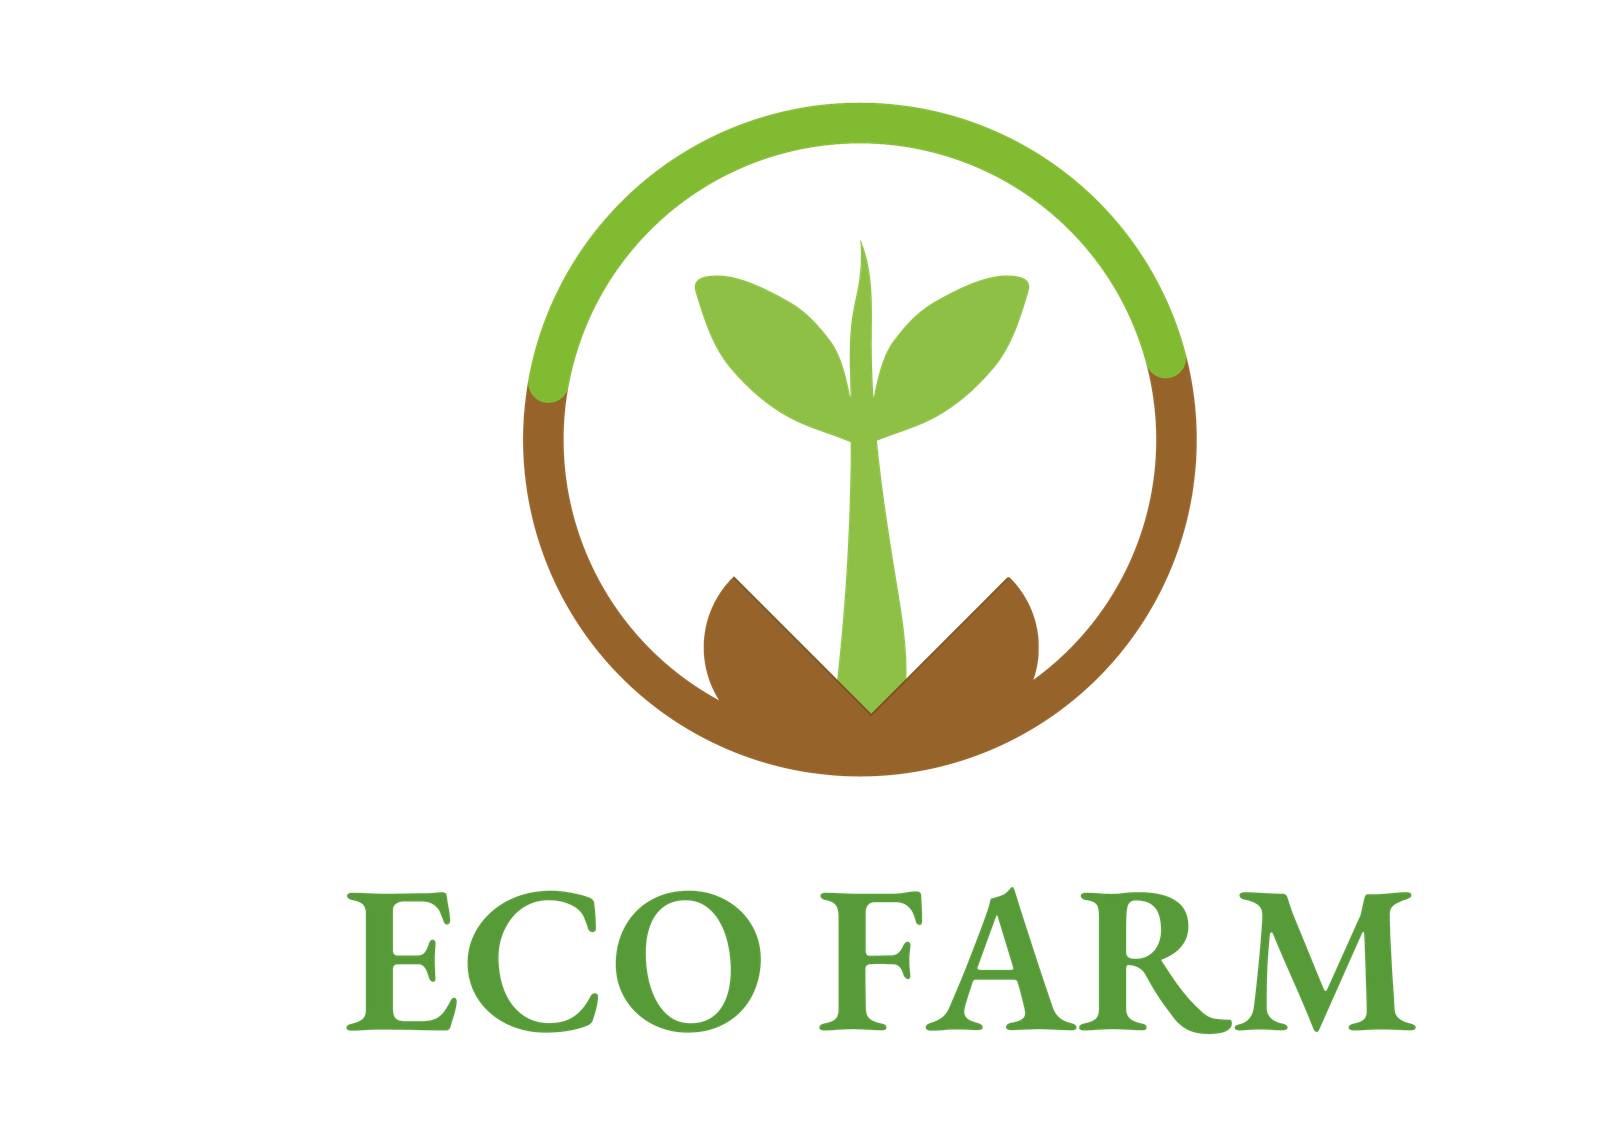 MADAC Marketing Agency: Fueling Success for Eco Farm through Innovative Marketing Solutions